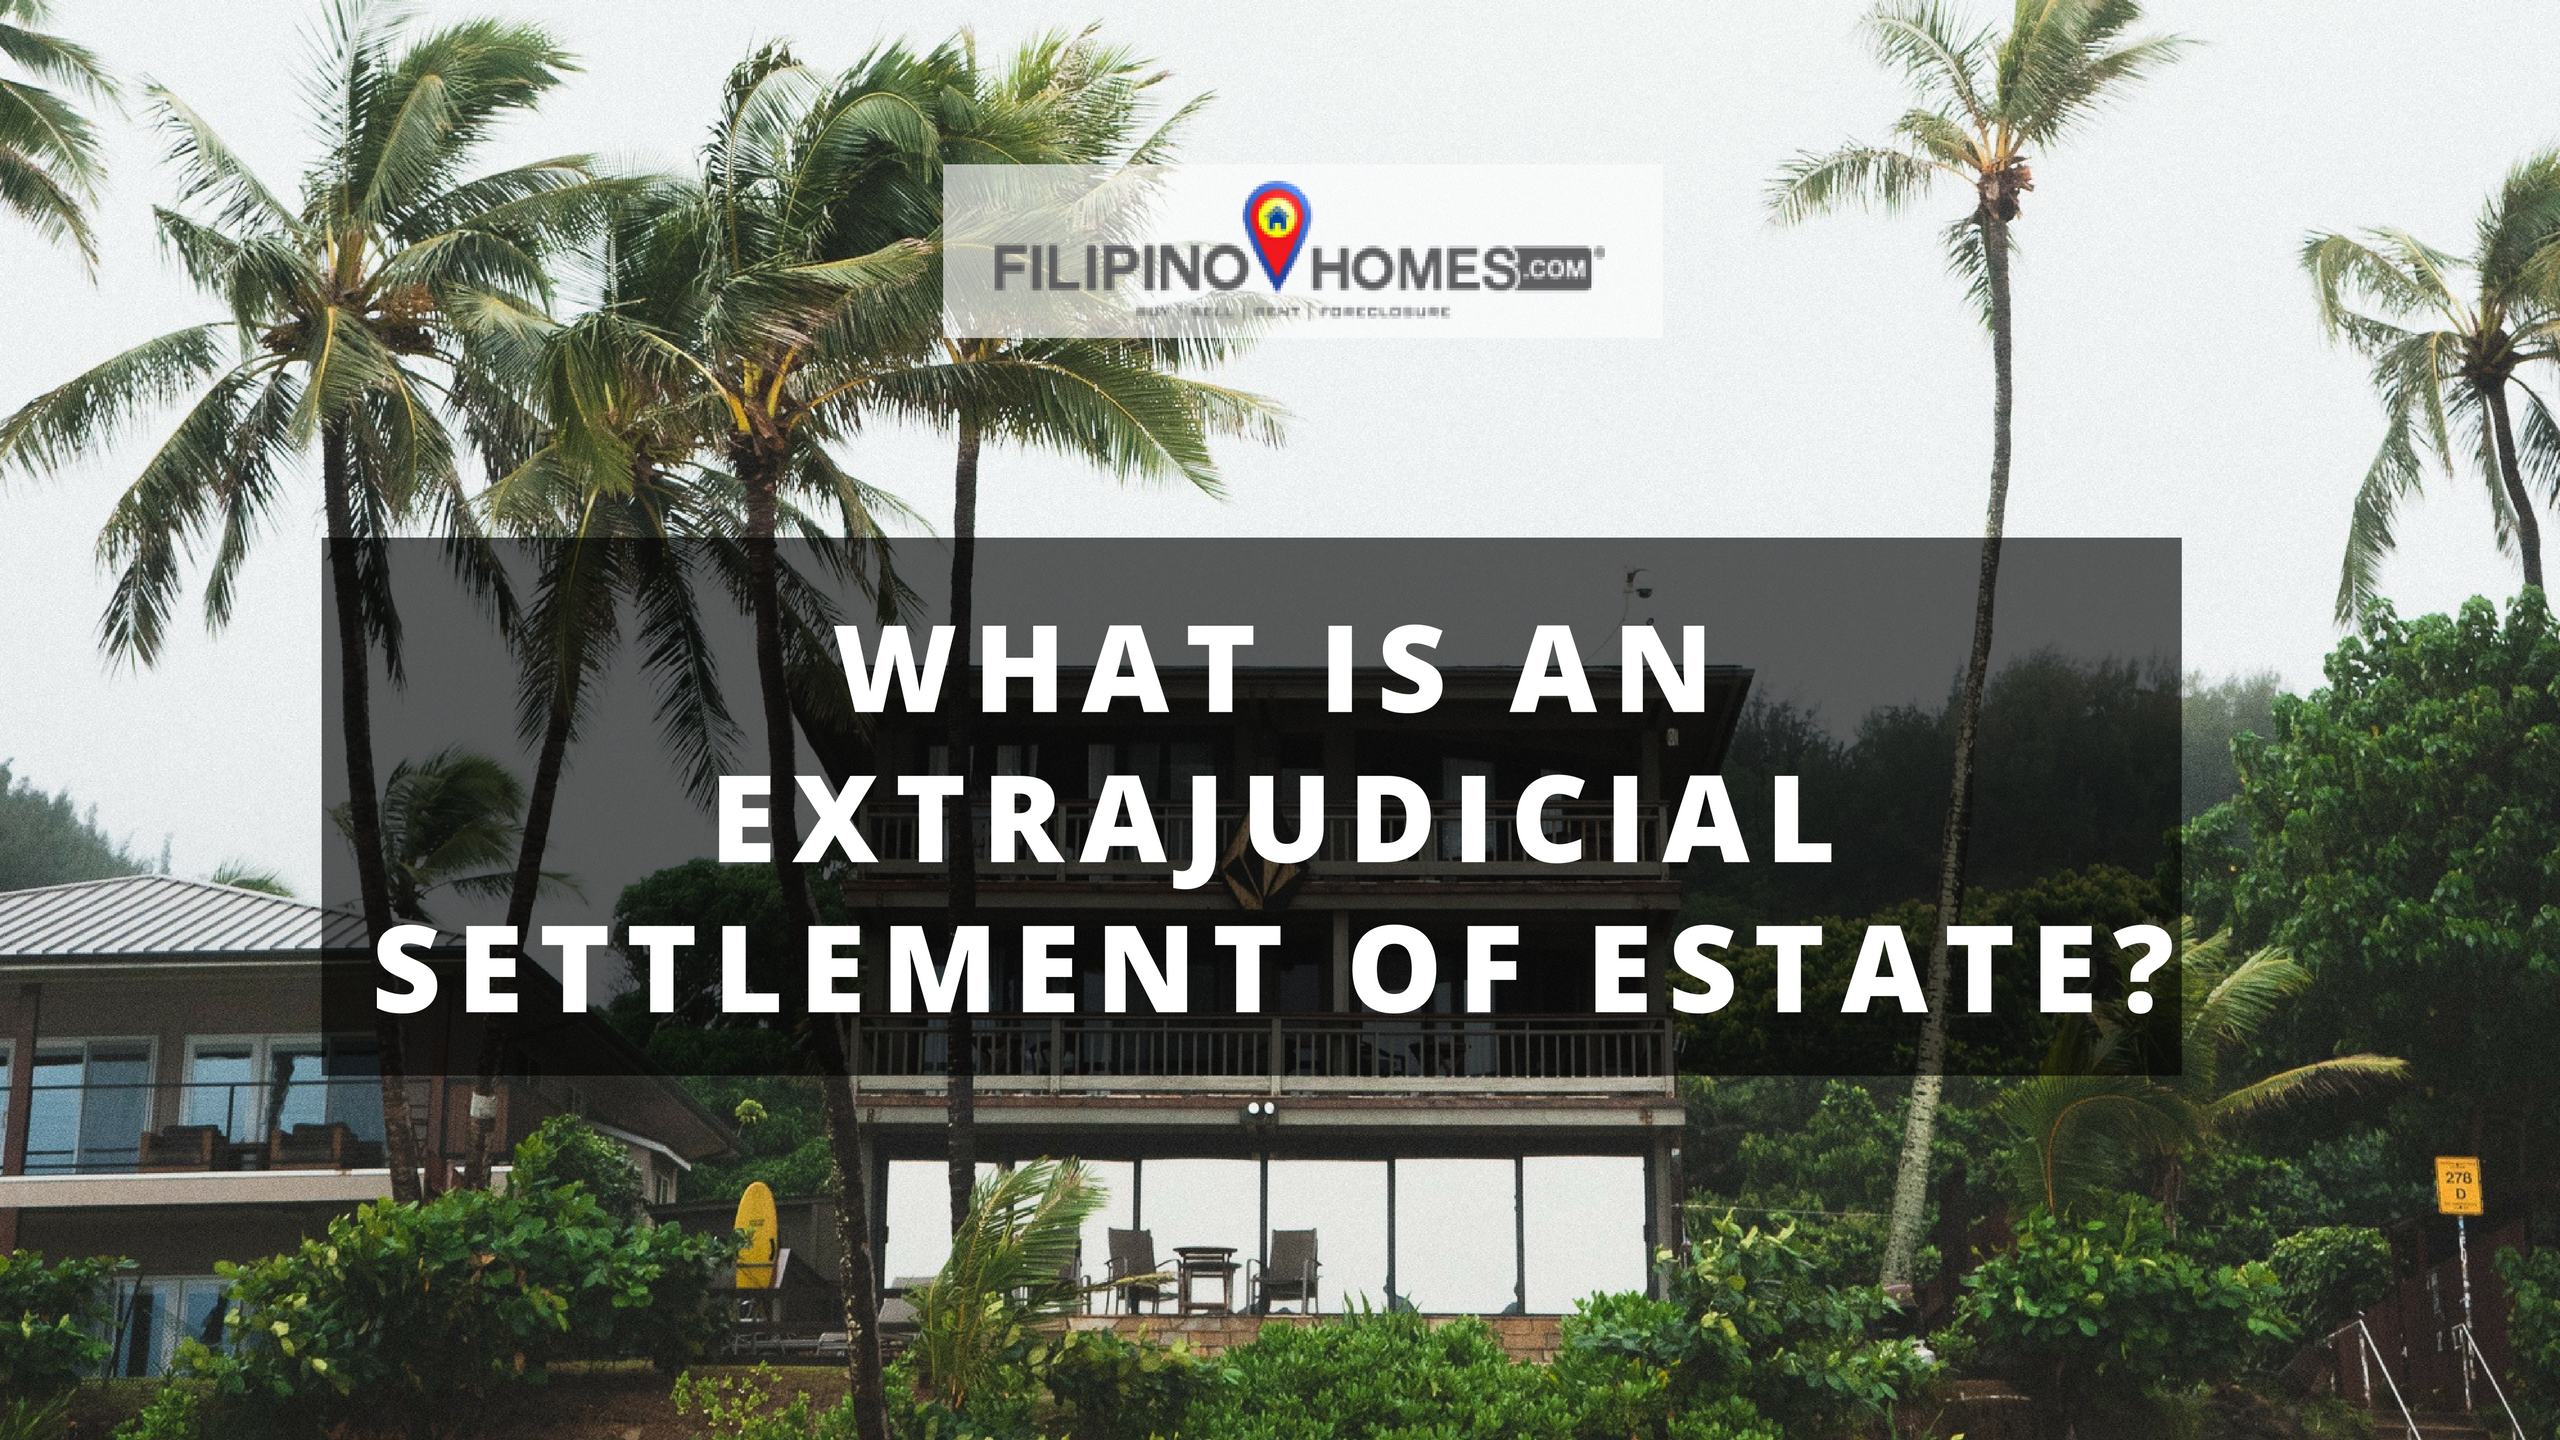 filipino homes | extrajudicial settlement of estate